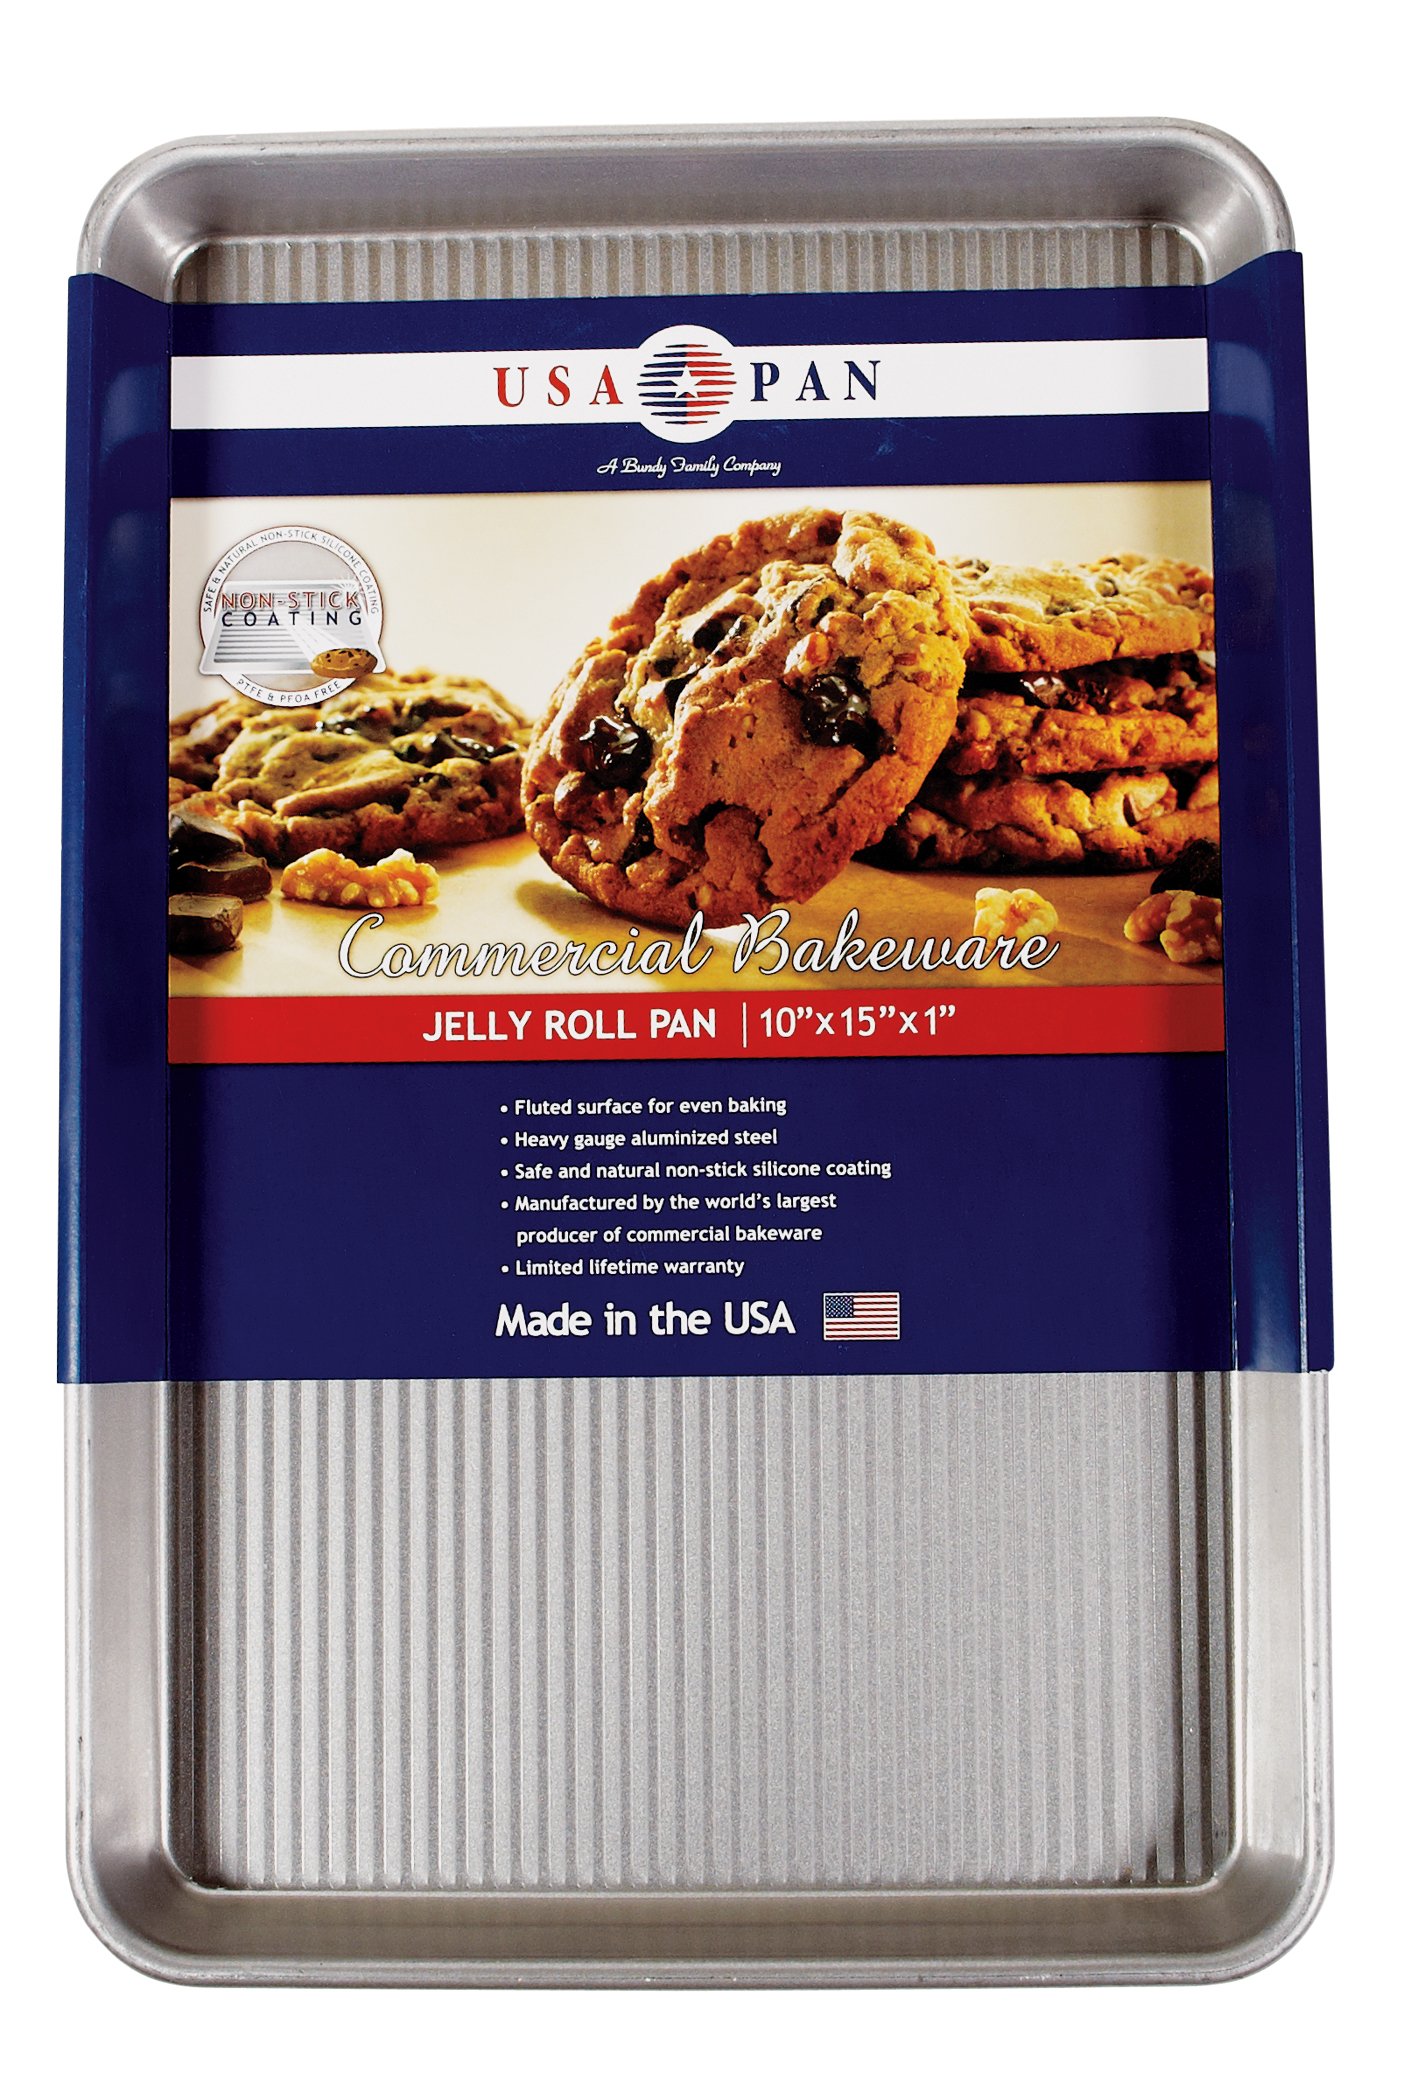 USA Pan Jelly Roll Pan 10X15